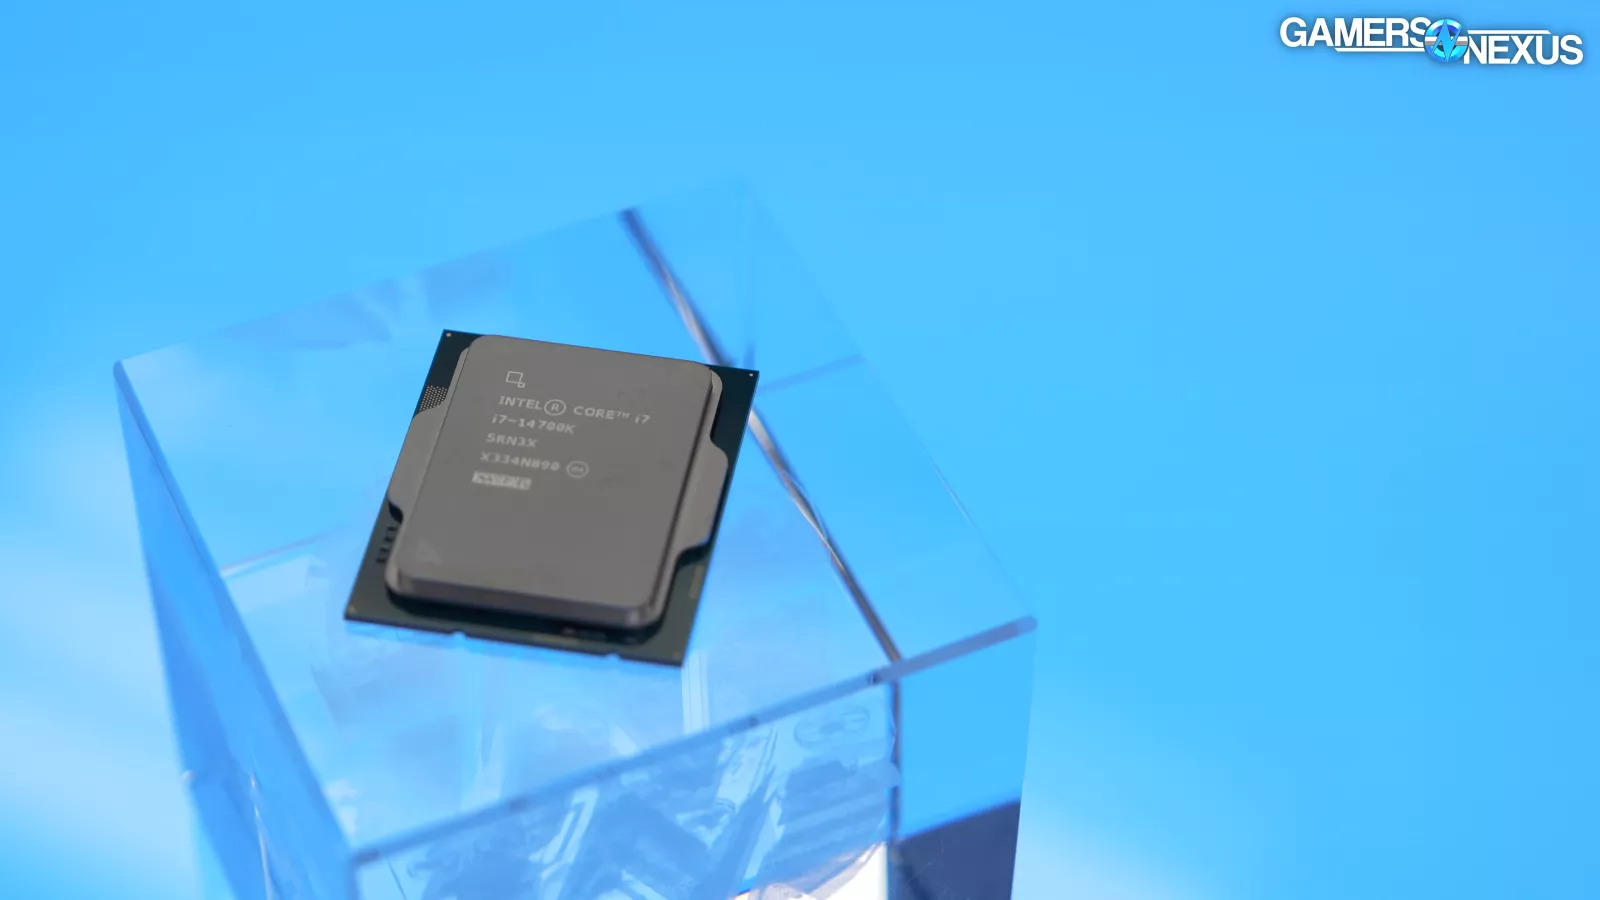 Intel Core i9-14900K: My Gaming / Productivity experience